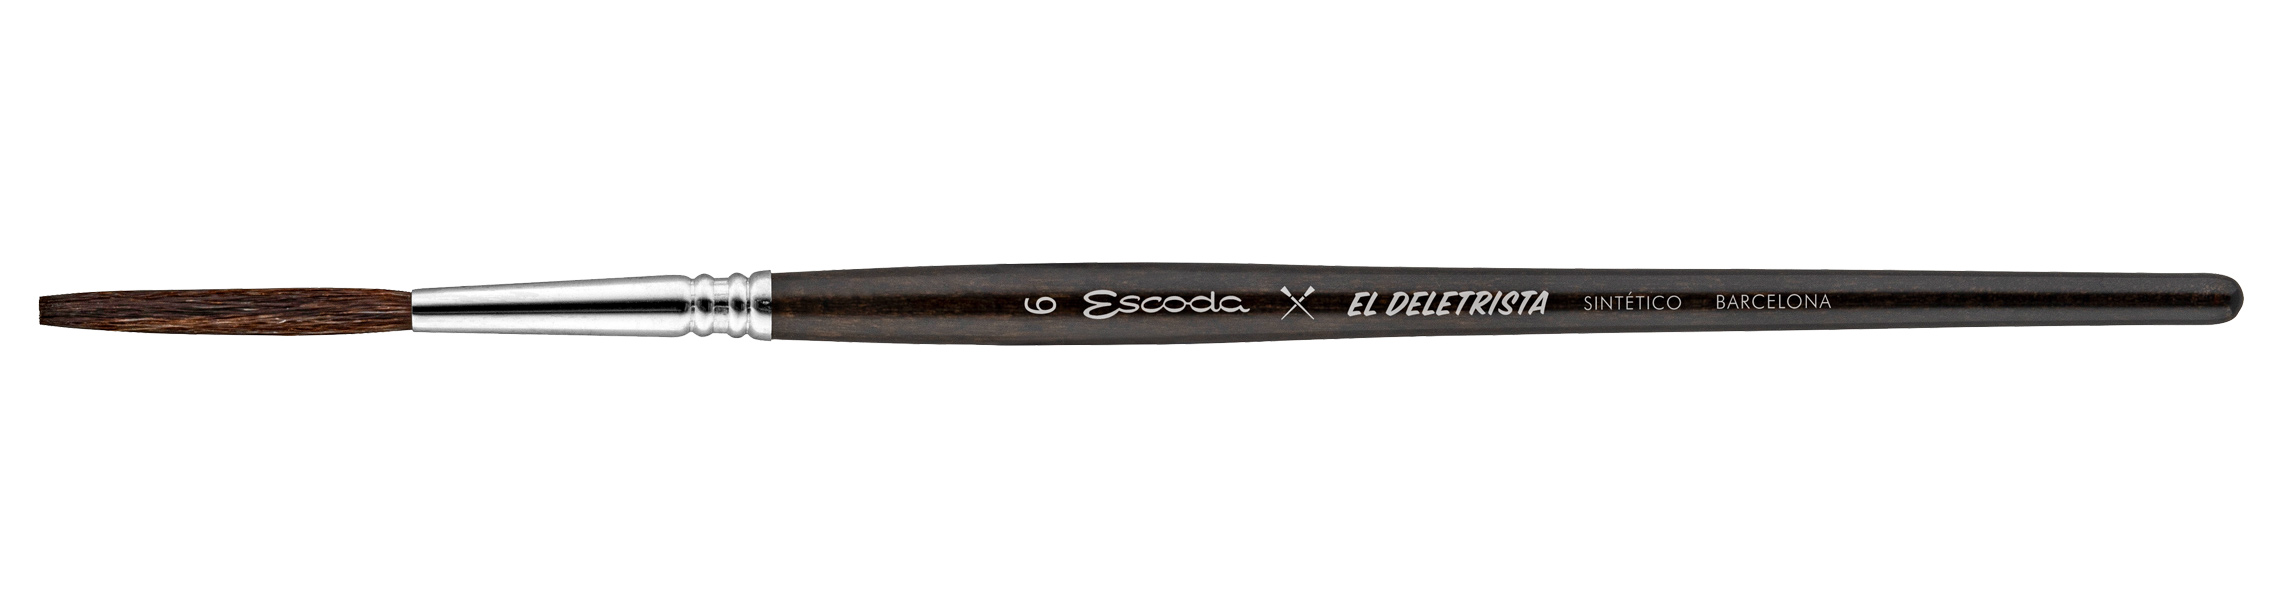 Escoda brushes serie 6525